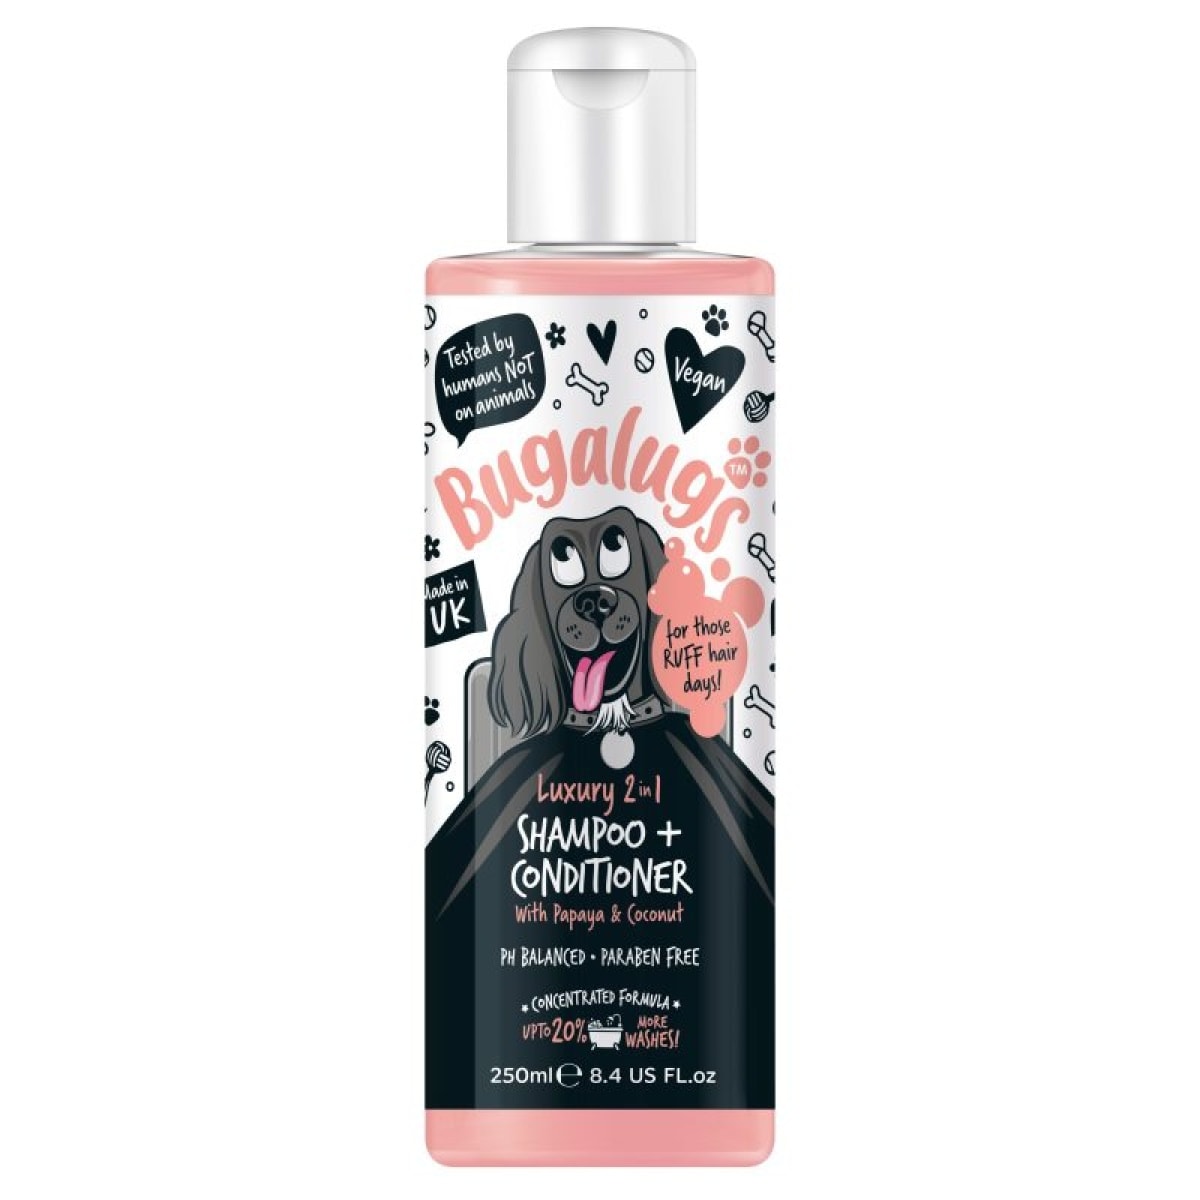 Bugalugs - Luxury 2 in 1 Dog Shampoo & Conditioner 250ml Main Image